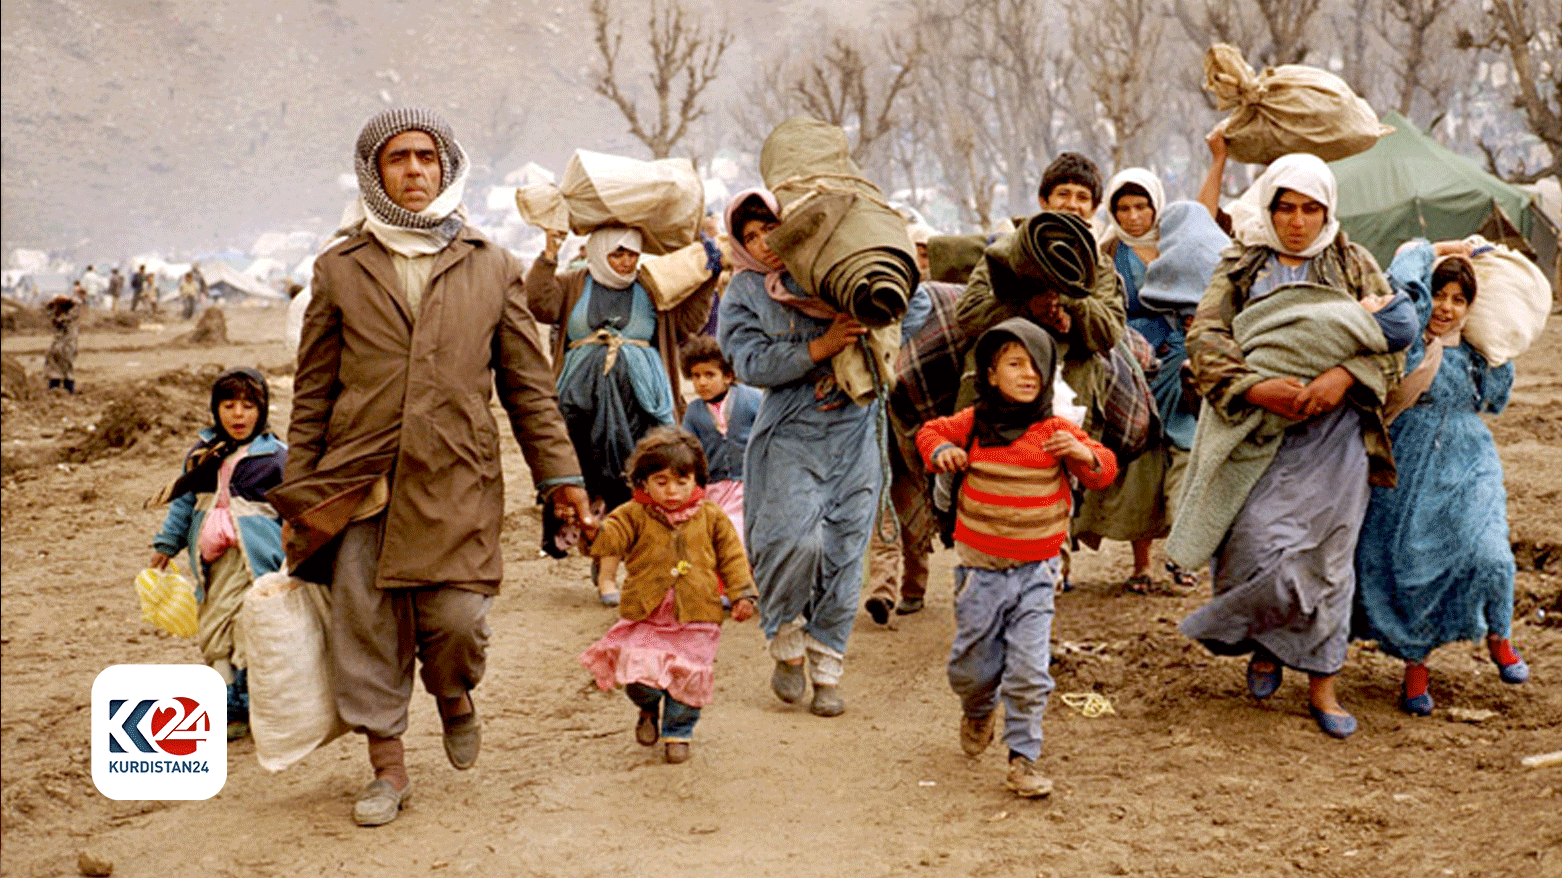 کۆڕەوە ملیۆنییەکەی خەڵکی باشووری کوردستان لە 1991